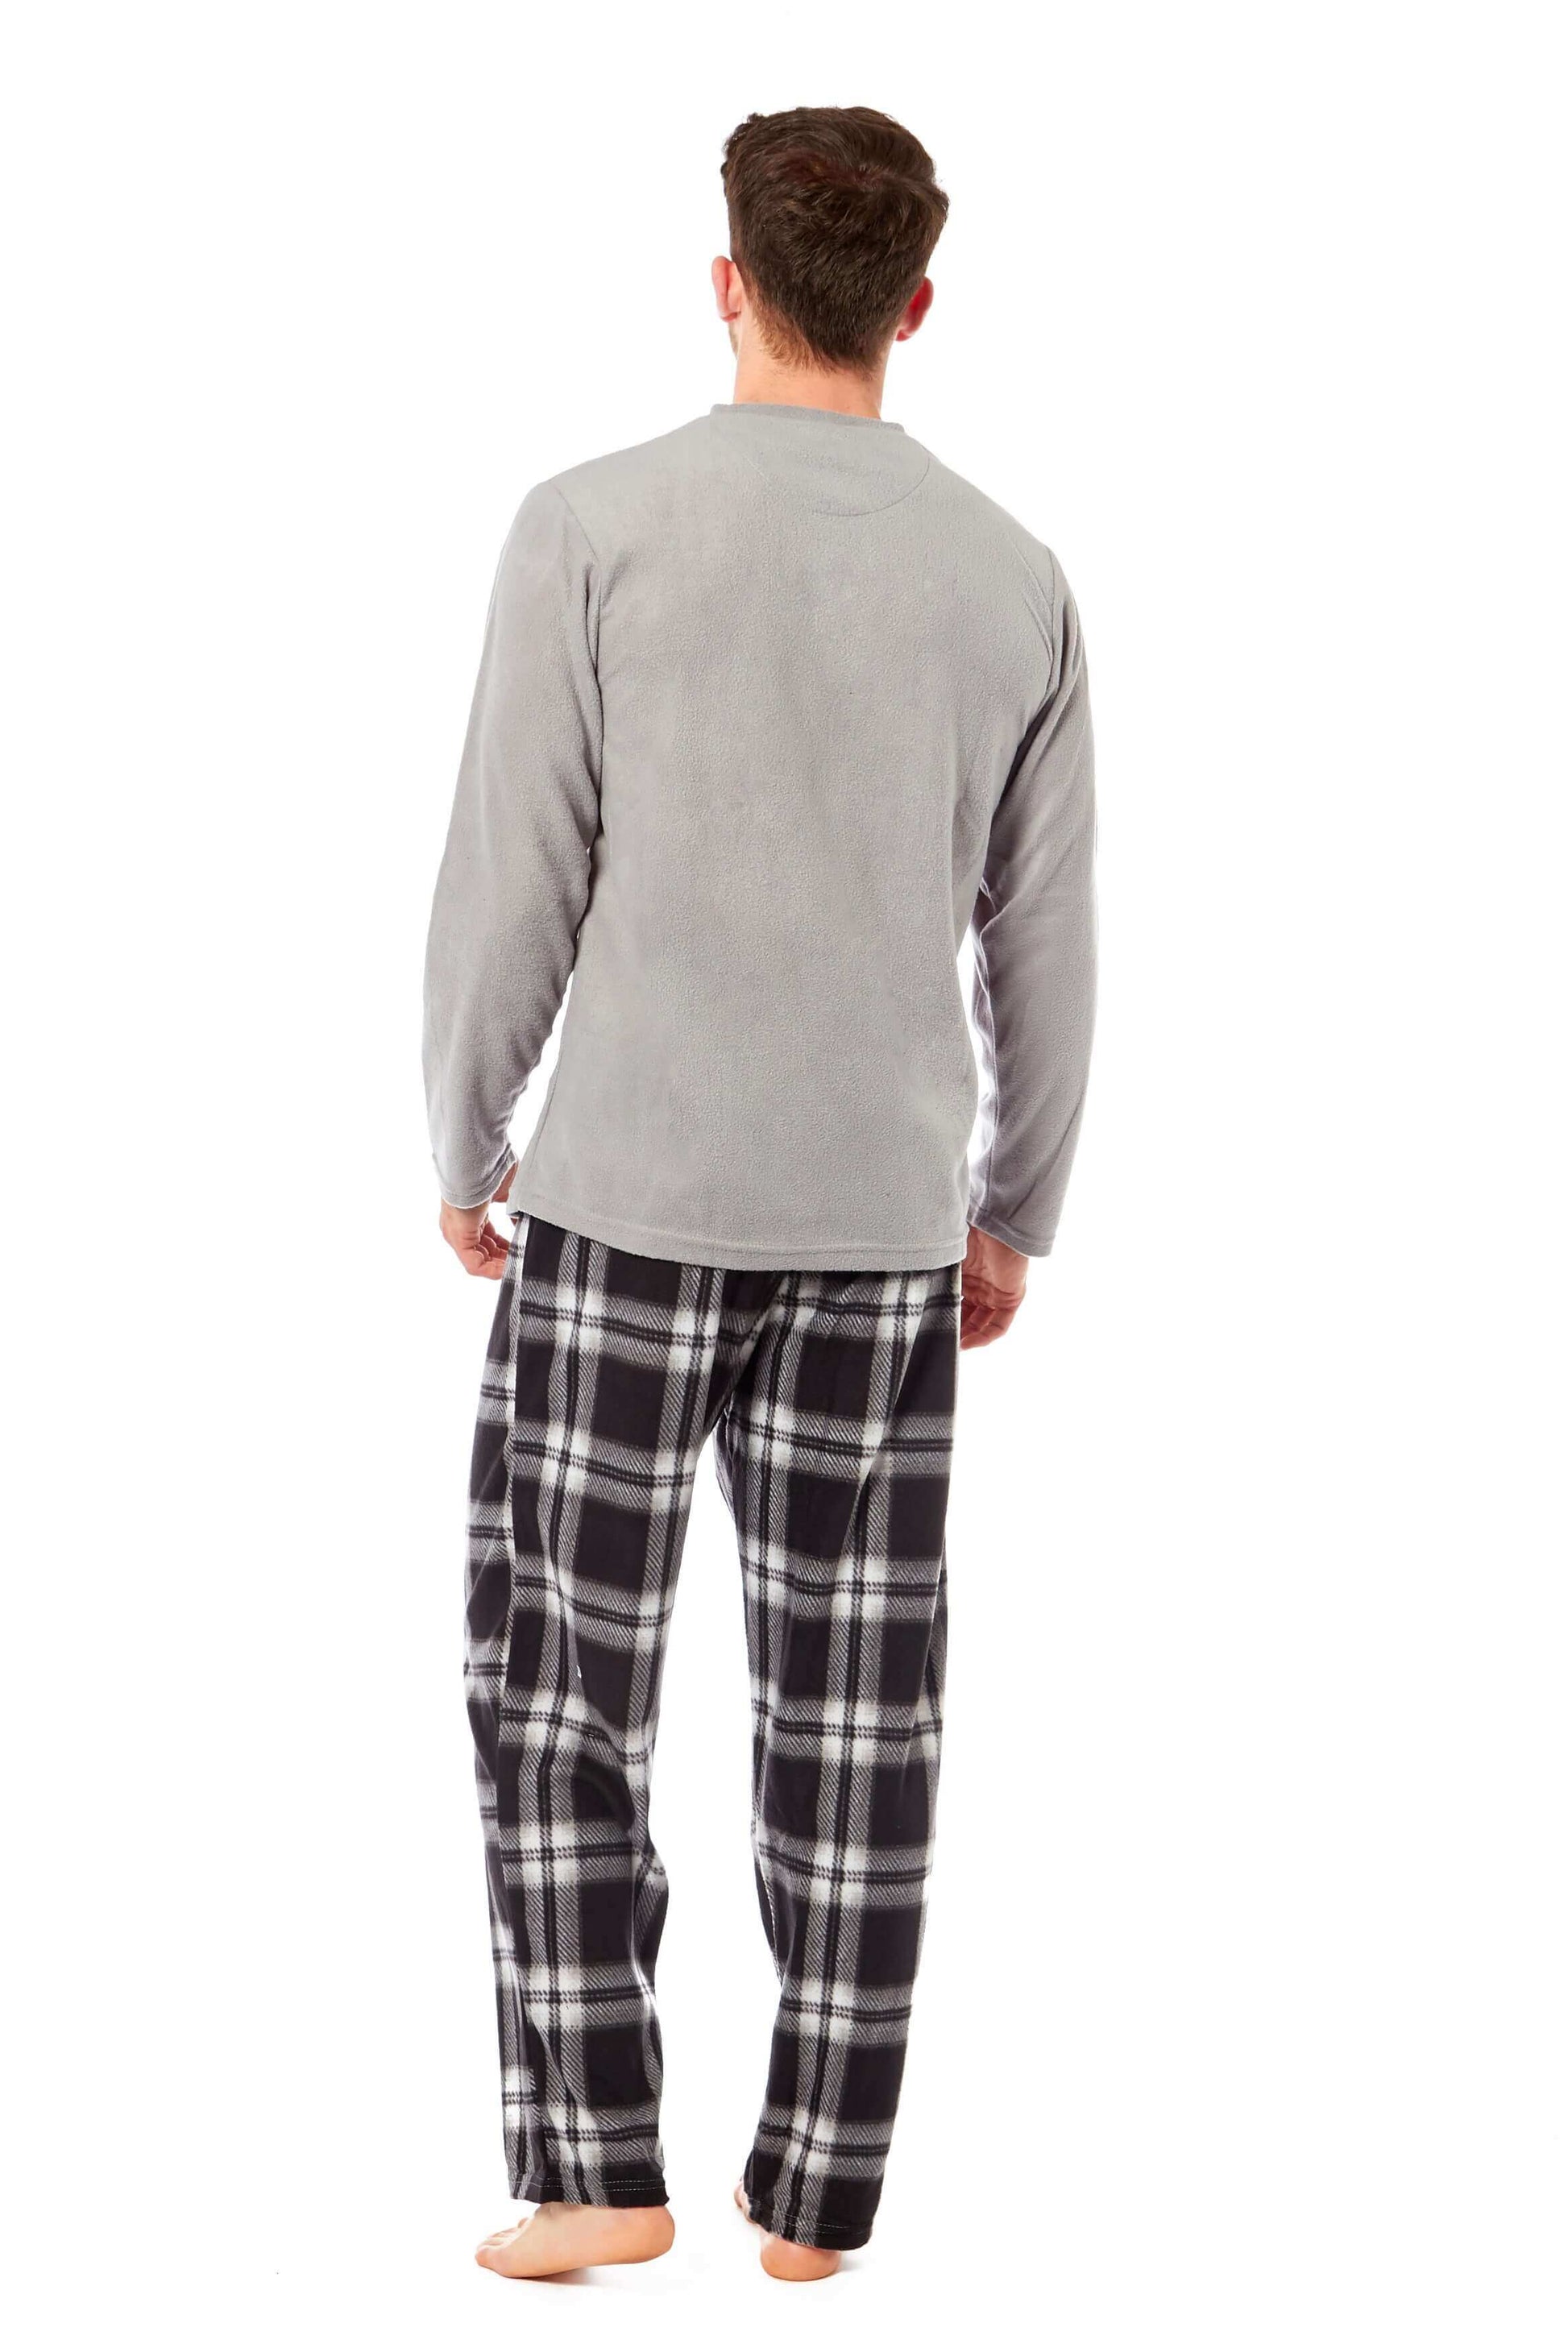 Men's Fleece Pyjama Set With Check Pants, Thermal Pyjamas, PJ Sets, Loungewear. Buy now for £14.00. A Pyjamas by Toro Rocco. black, blue, bottom, boys, check, clothing, comfortable, fleece, fluffy, grey, home, large, long johns, long sleeve, loungewear, m